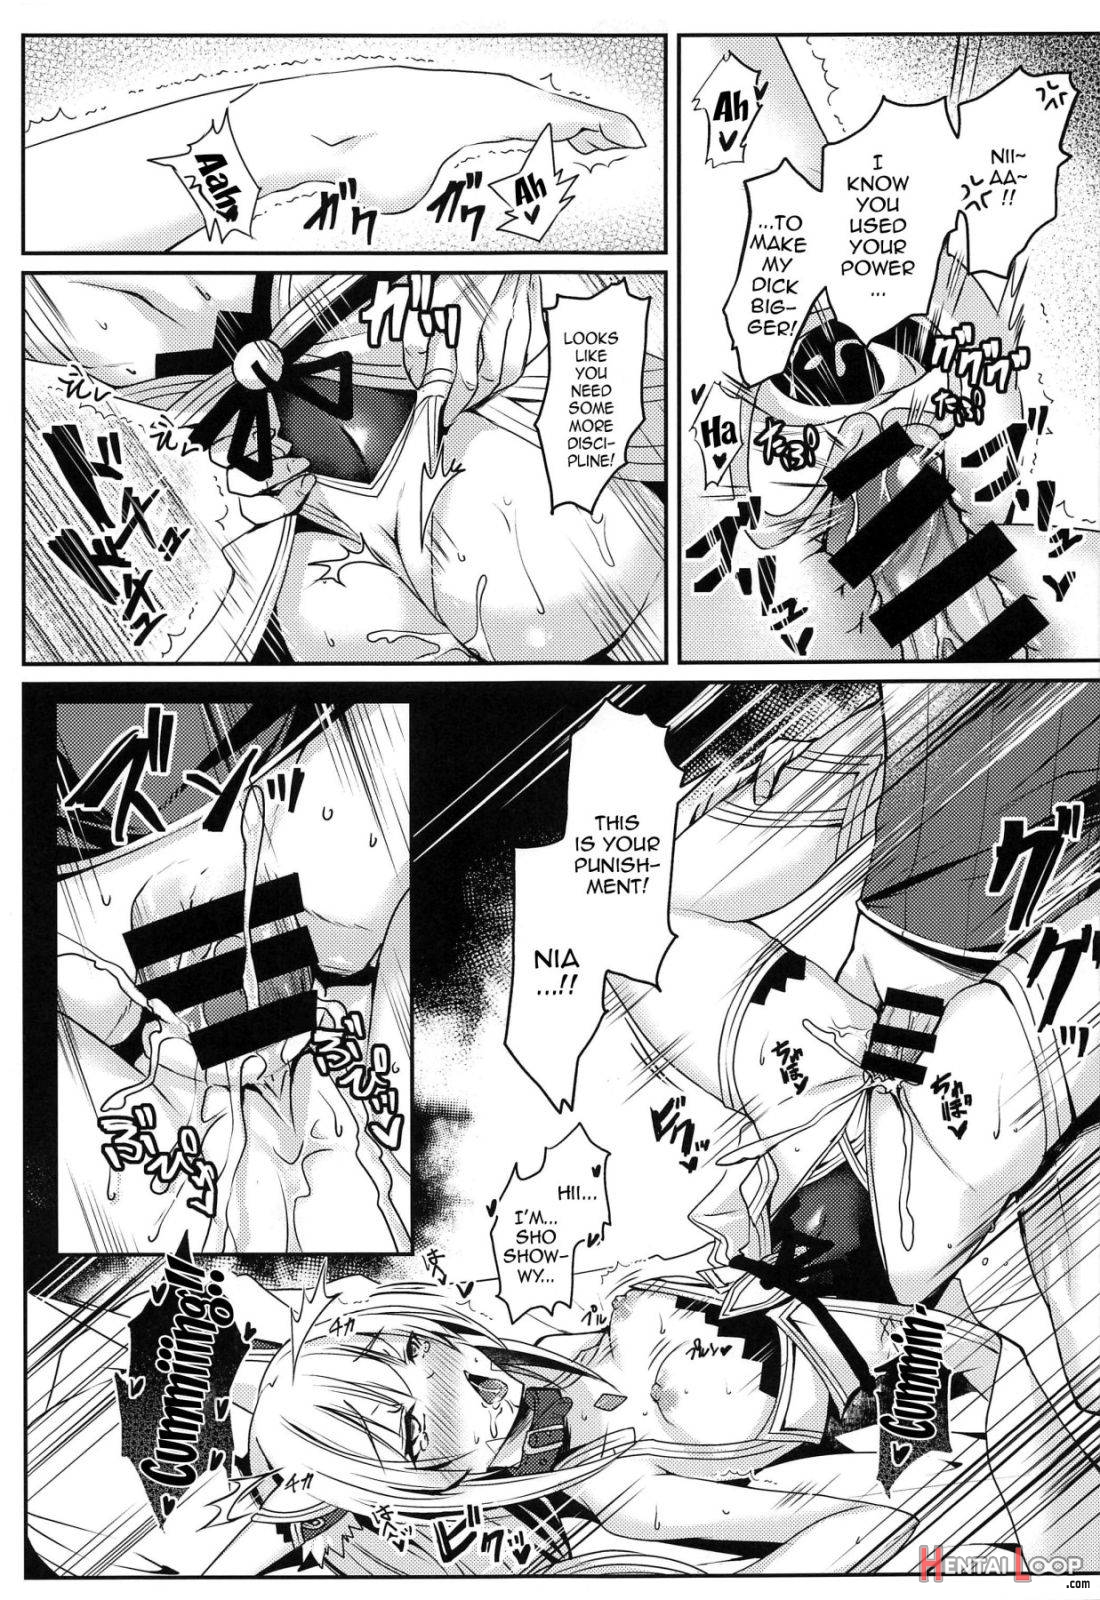 Nia-chan no Ecchi Hon page 14